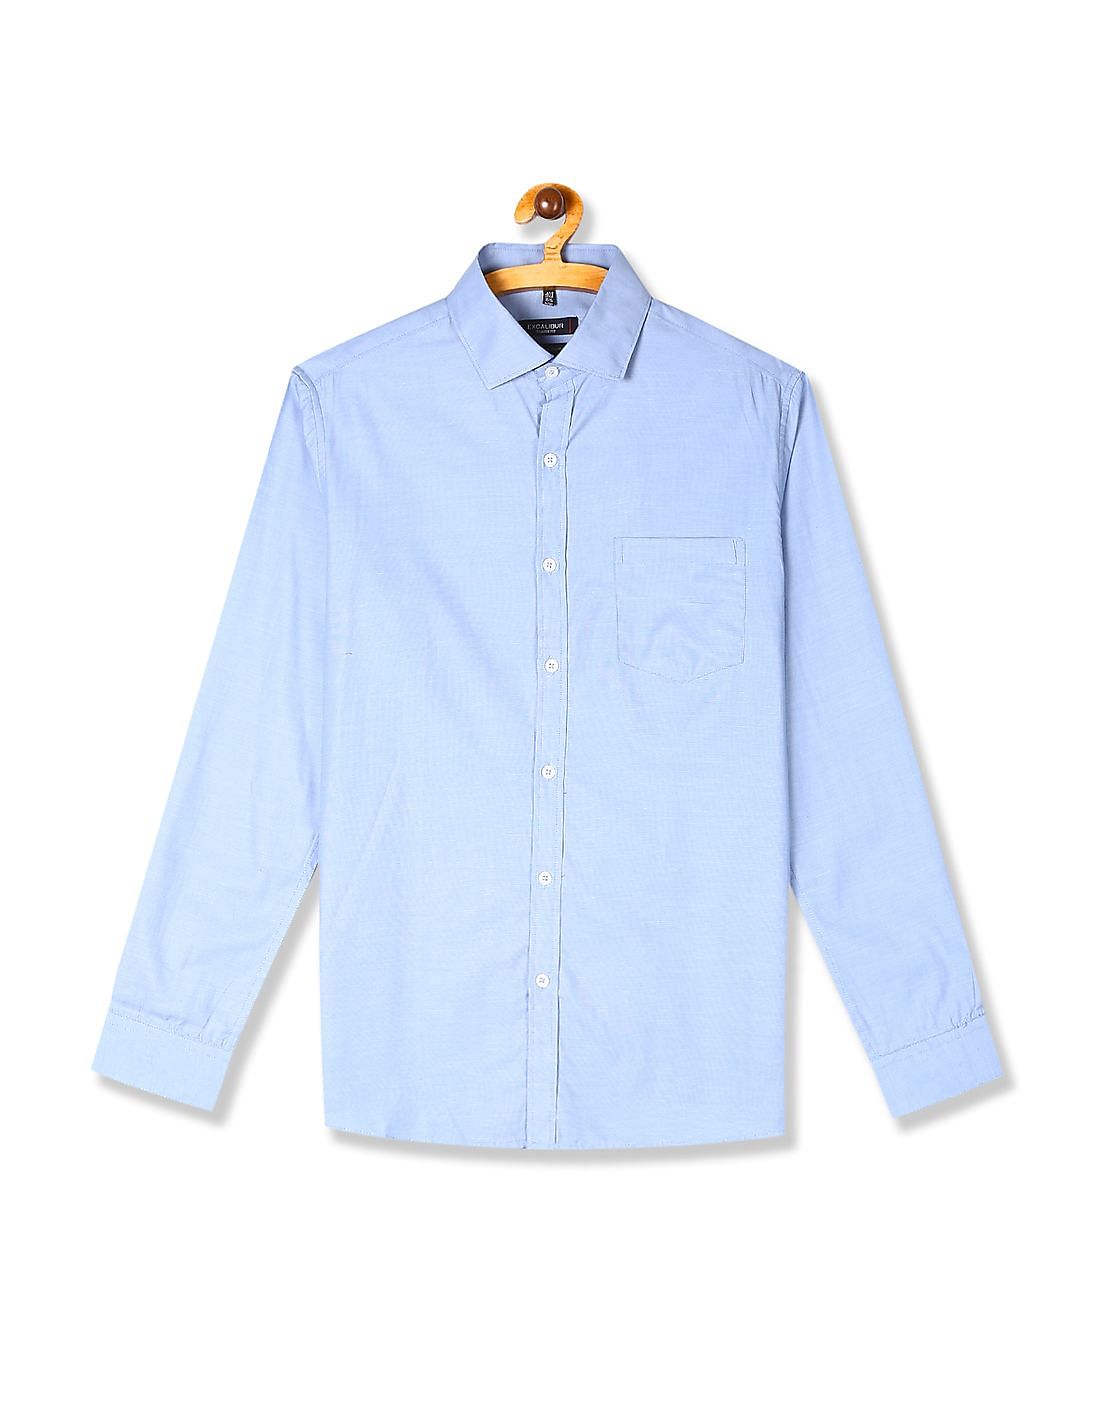 Buy Excalibur Blue Regular Fit Patterned Shirt - NNNOW.com